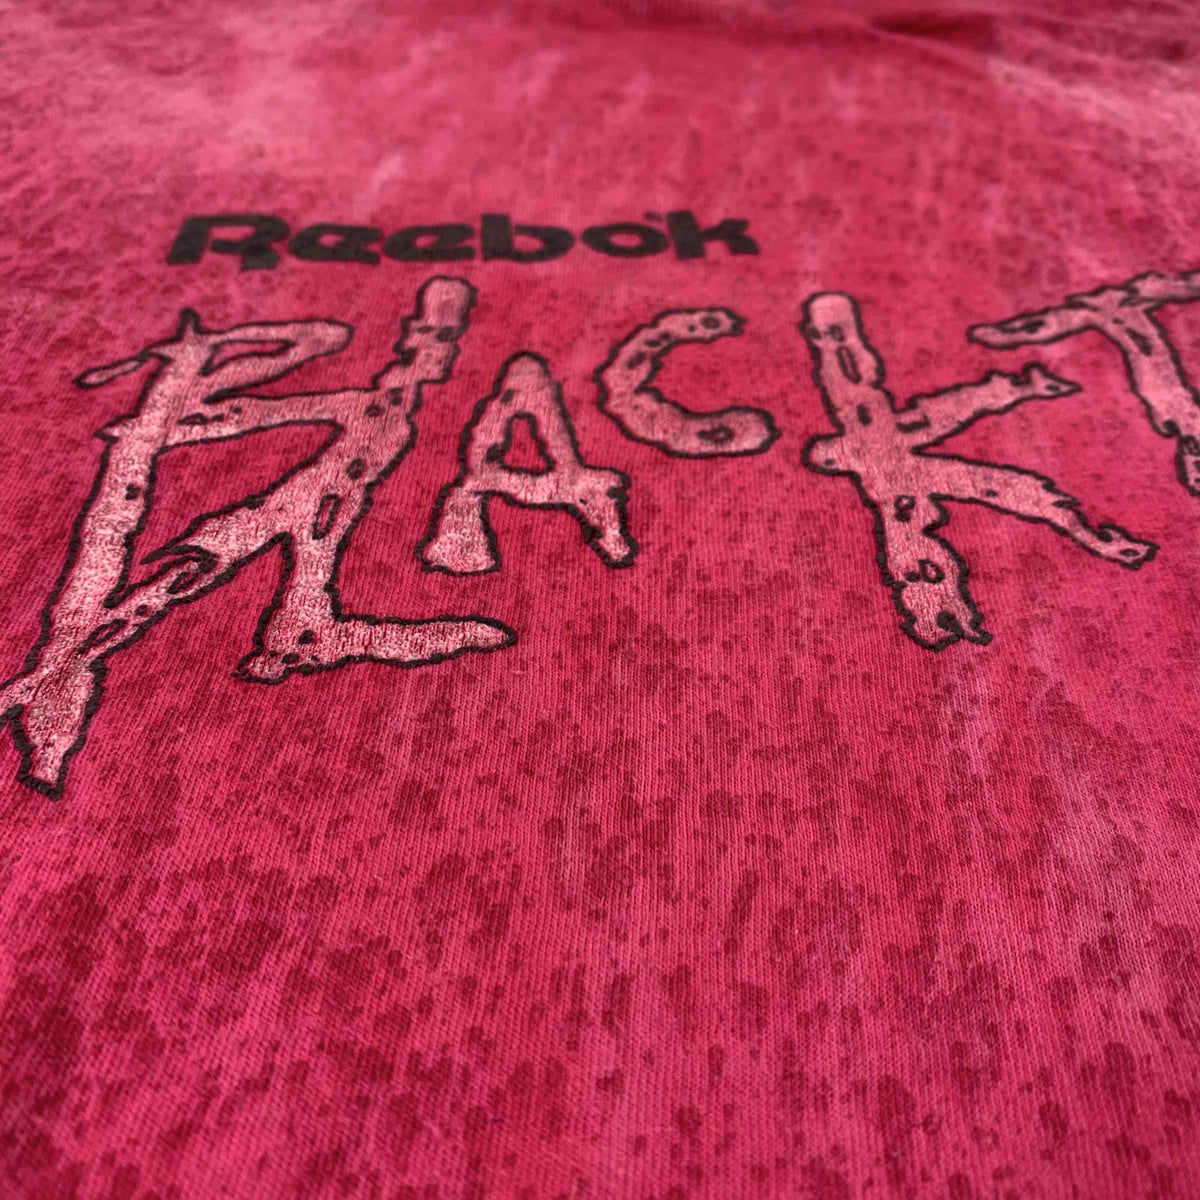 Vintage Original Reebok Blacktop T-shirt detail